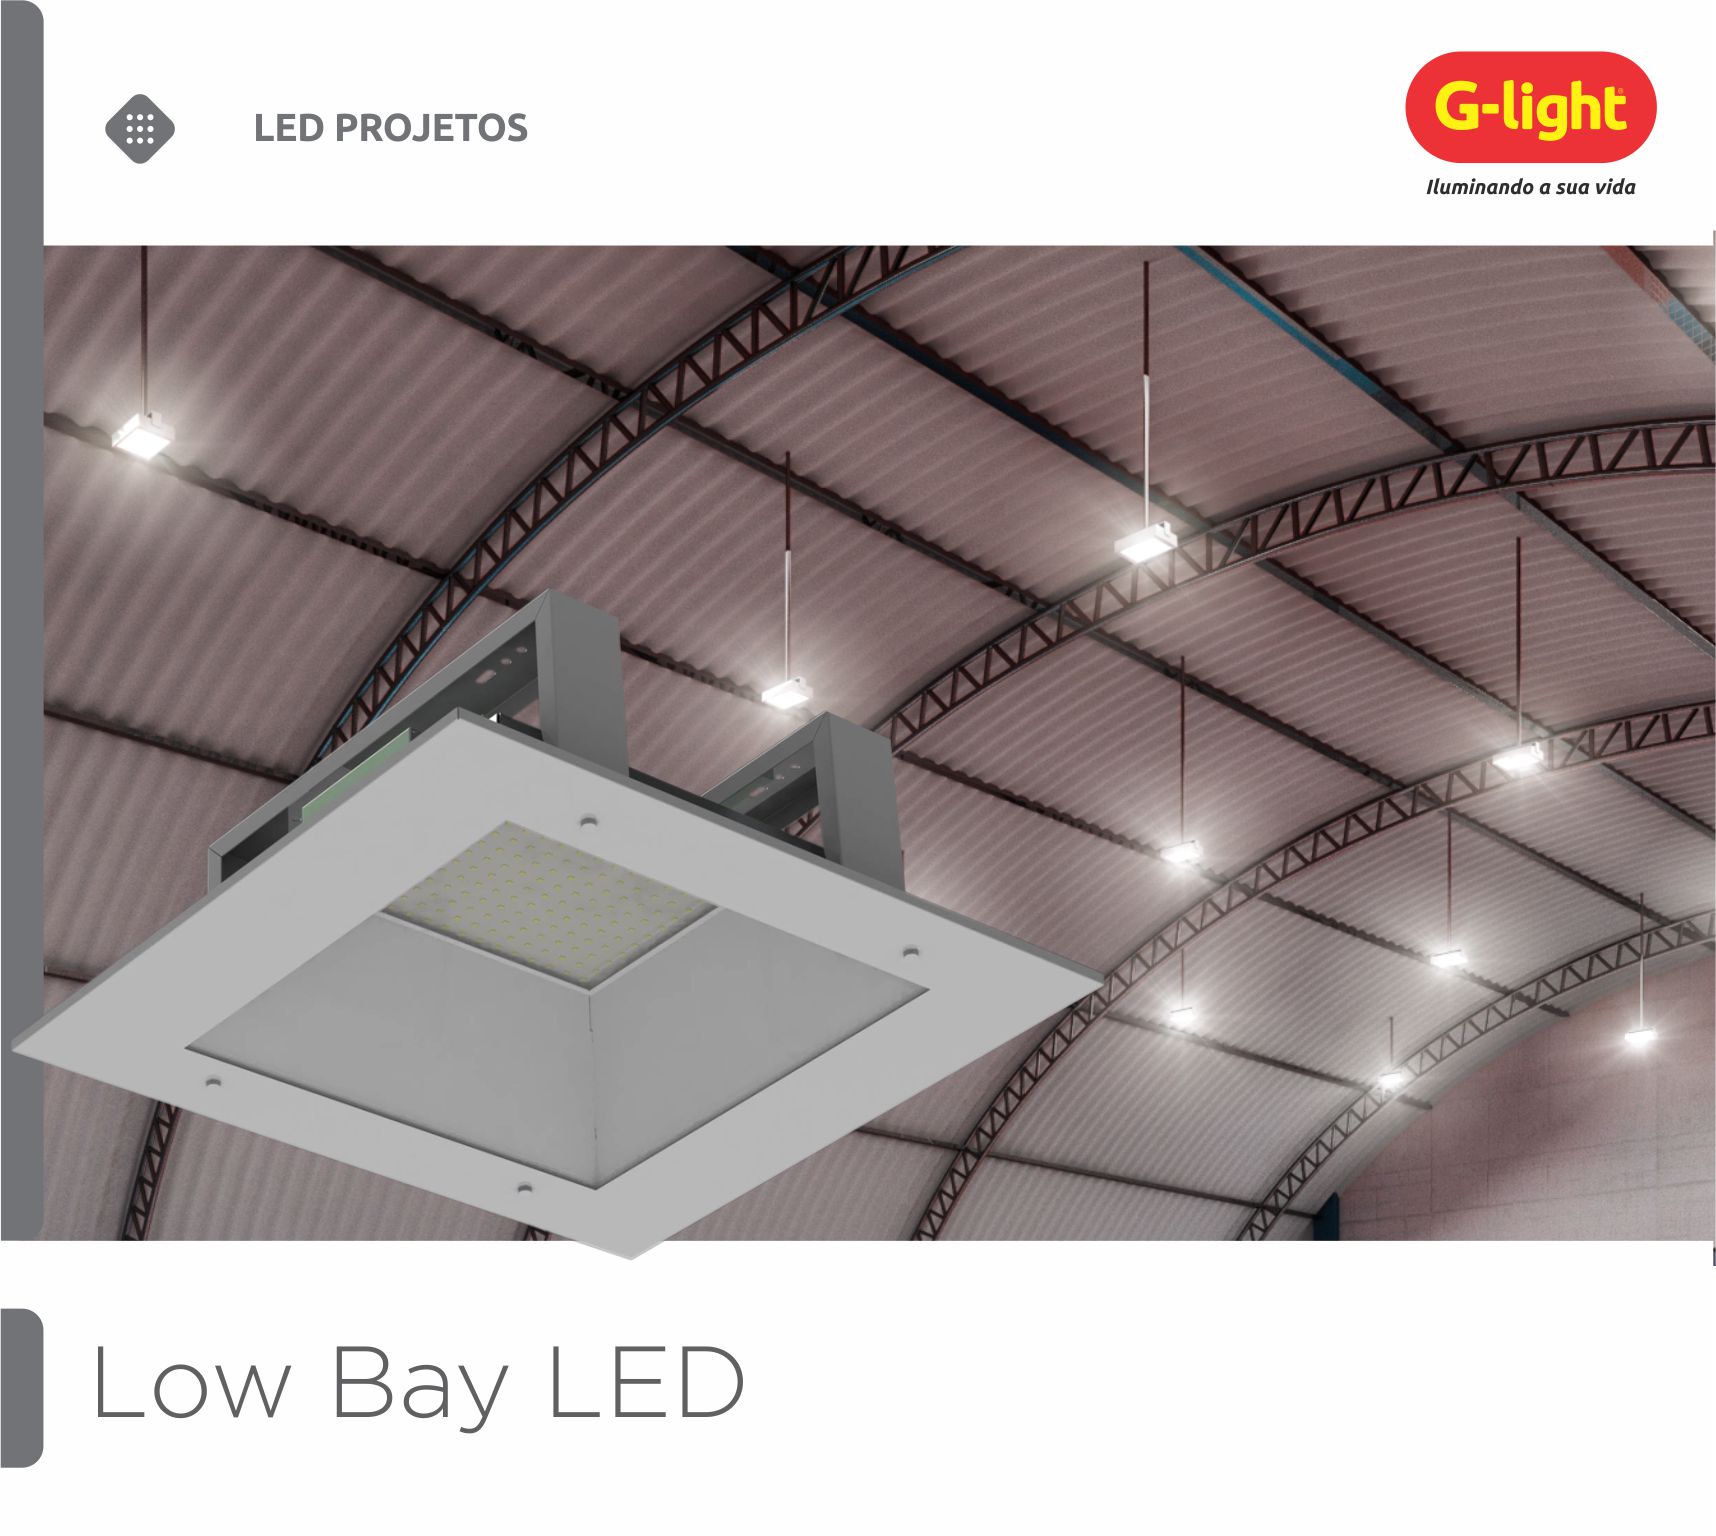 Low Bay LED